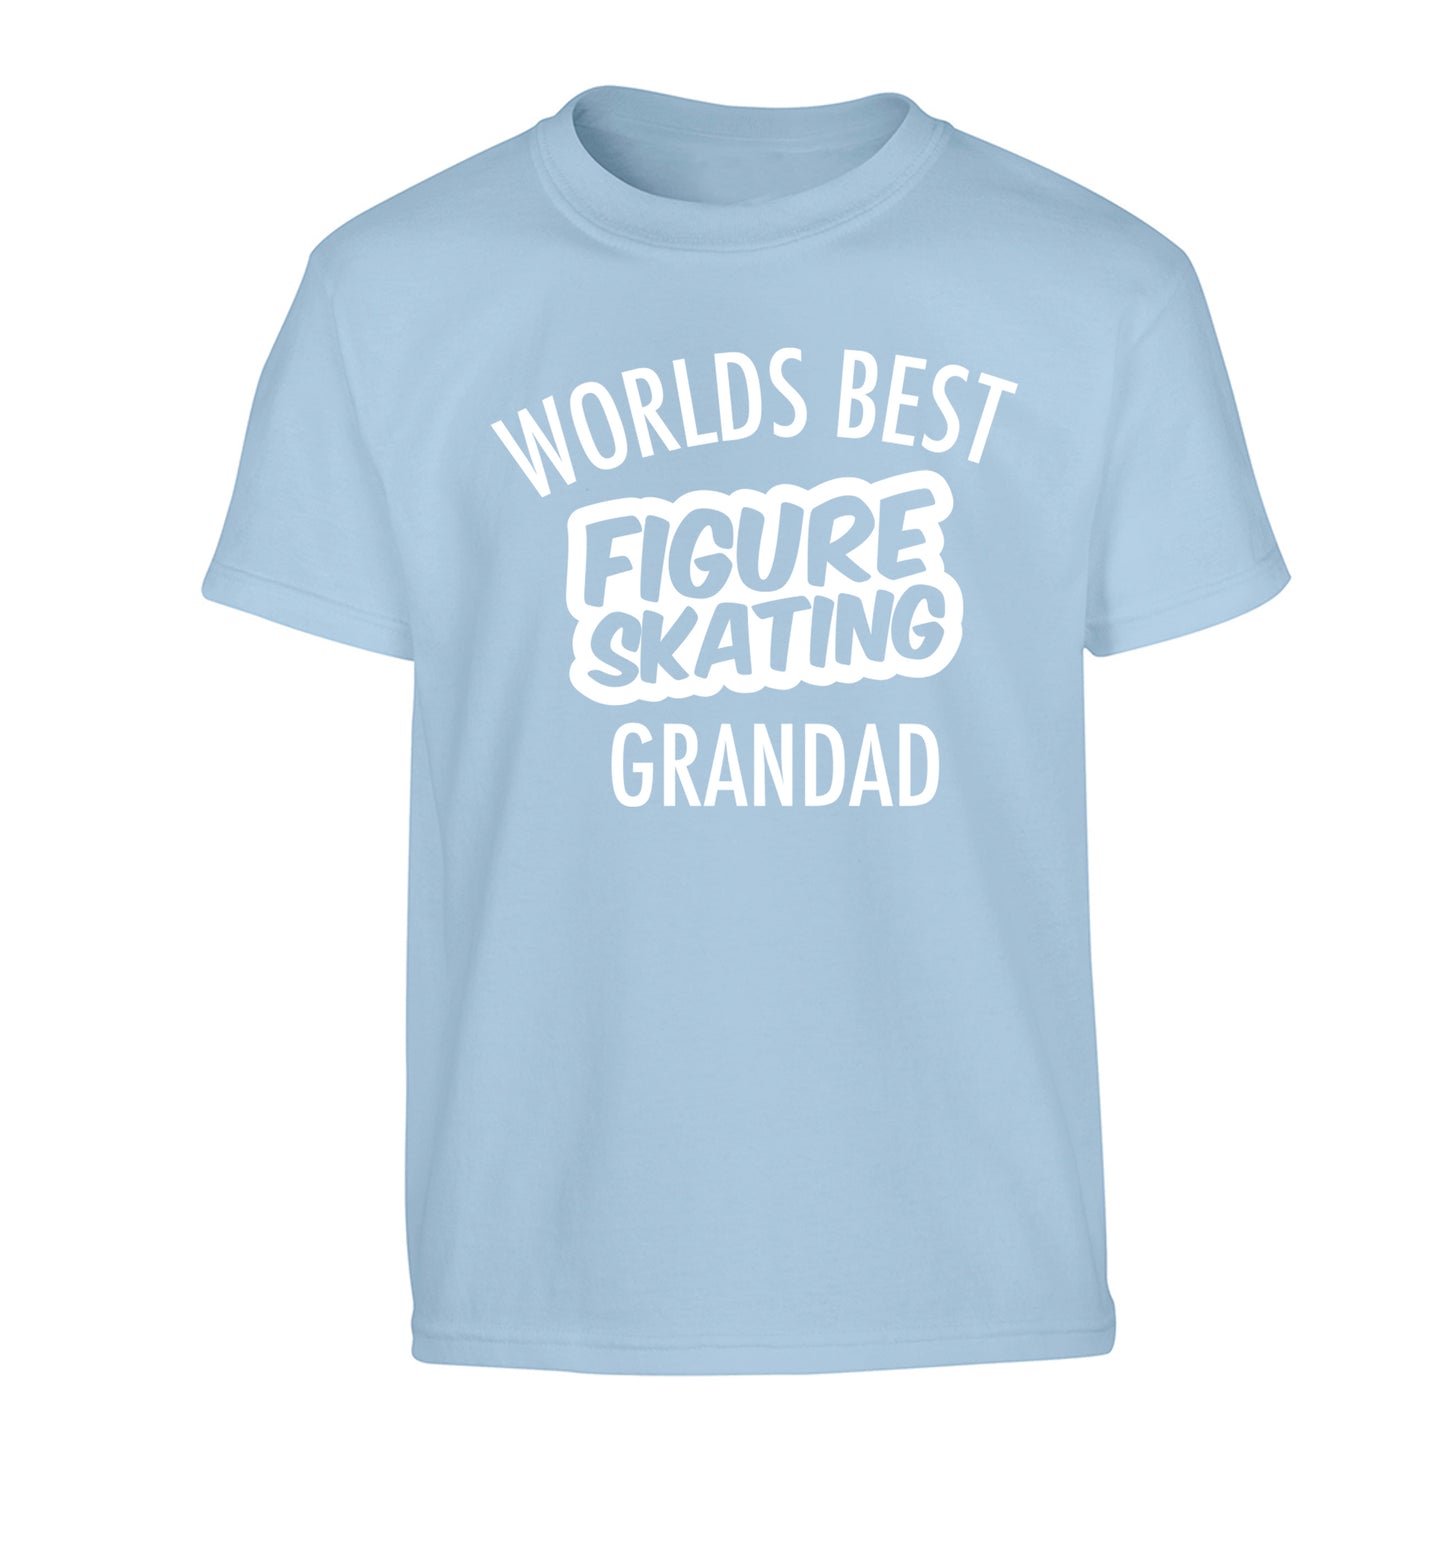 Worlds best figure skating grandad Children's light blue Tshirt 12-14 Years